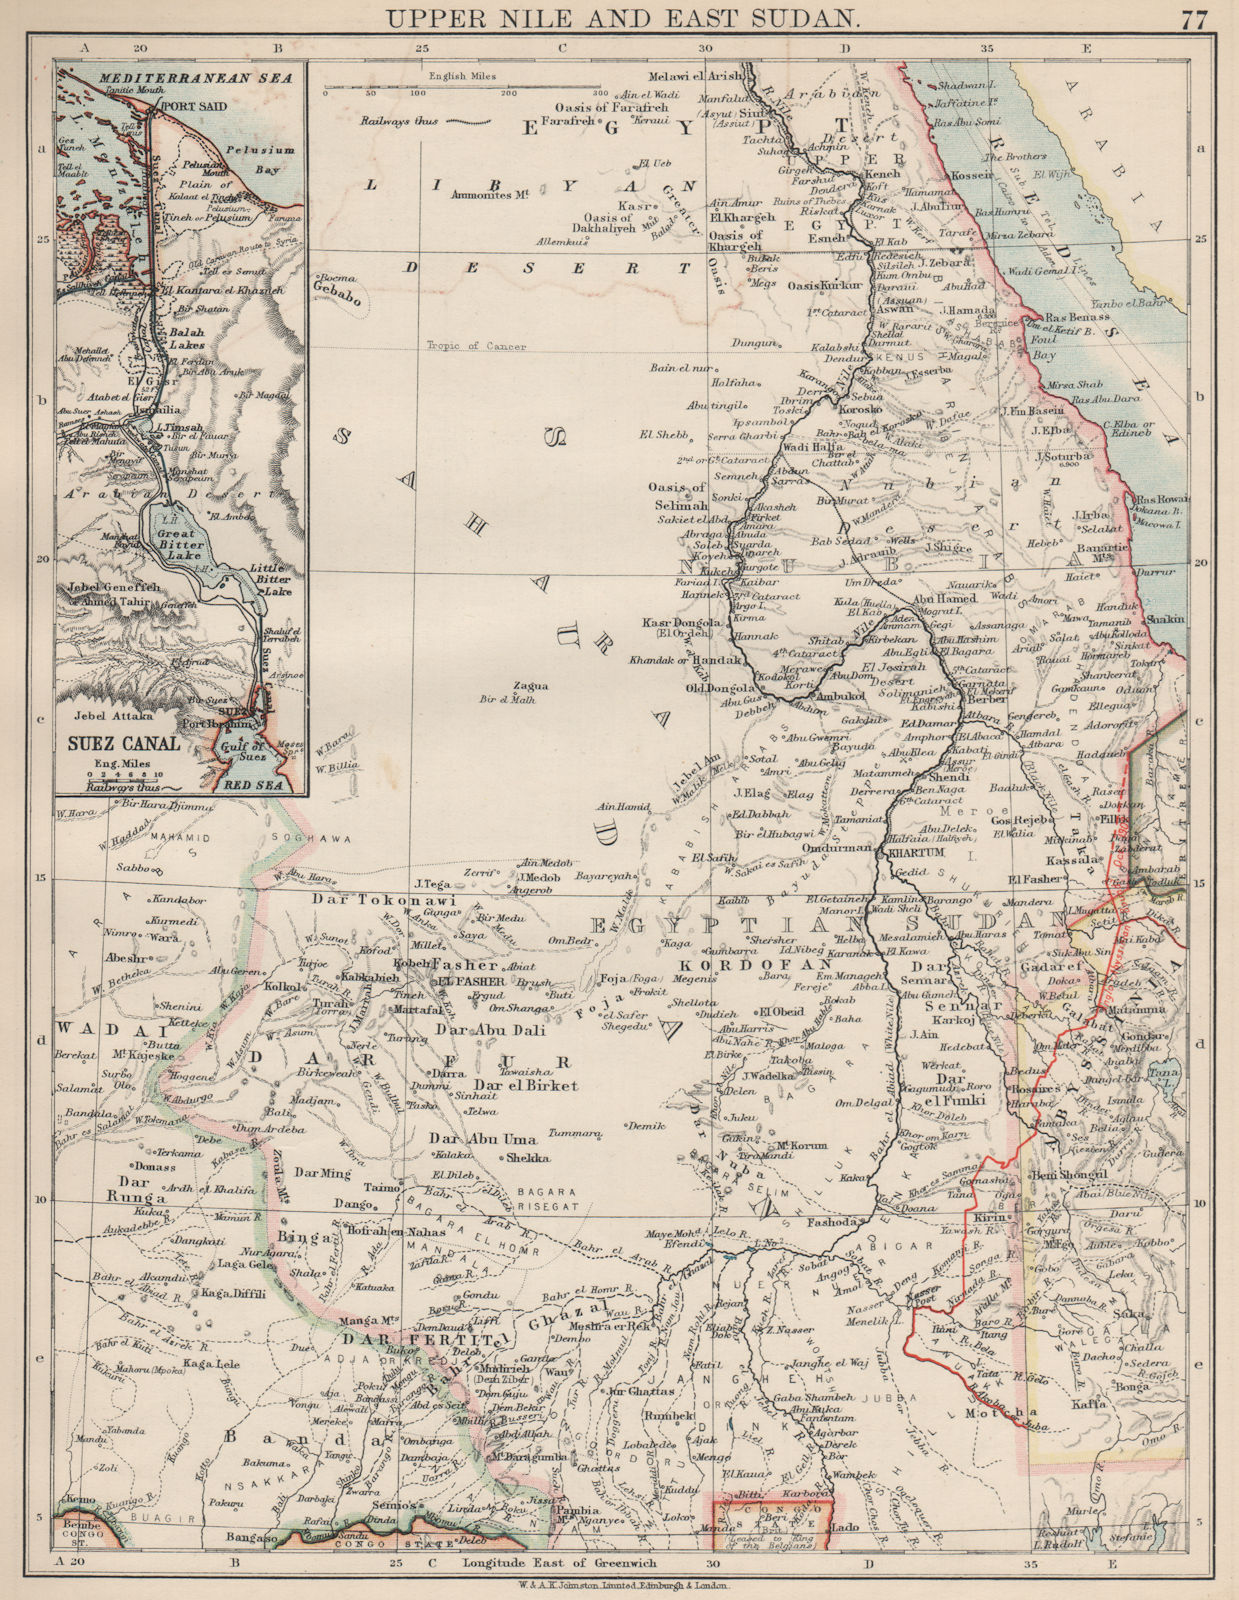 UPPER NILE, EAST SUDAN & SUEZ CANAL. Khartoum.White/Blue Nile. JOHNSTON 1903 map